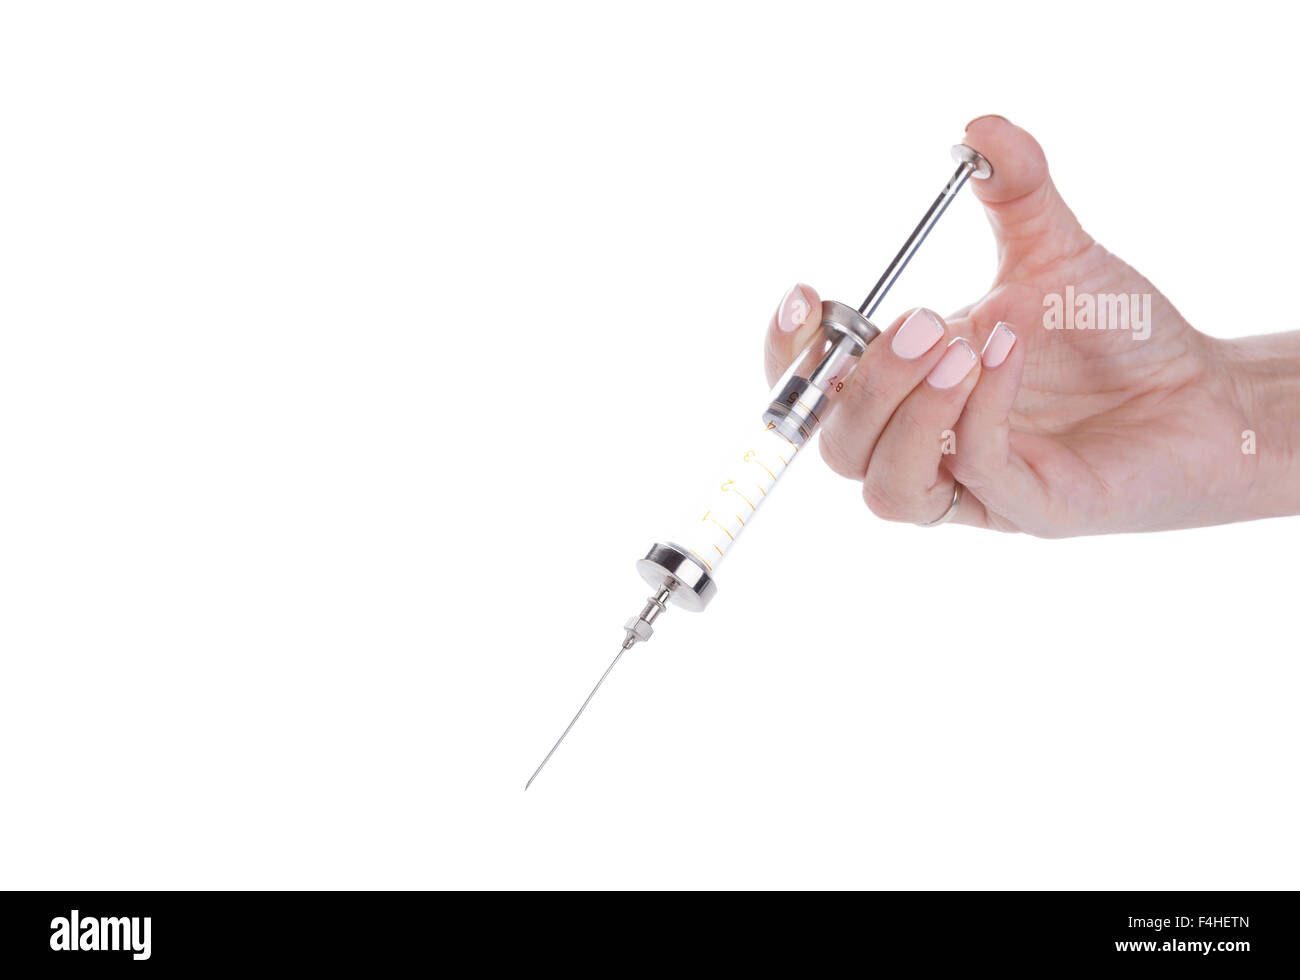 Old glass multiple use syringe in female hand, closeup on white background Stock Photo